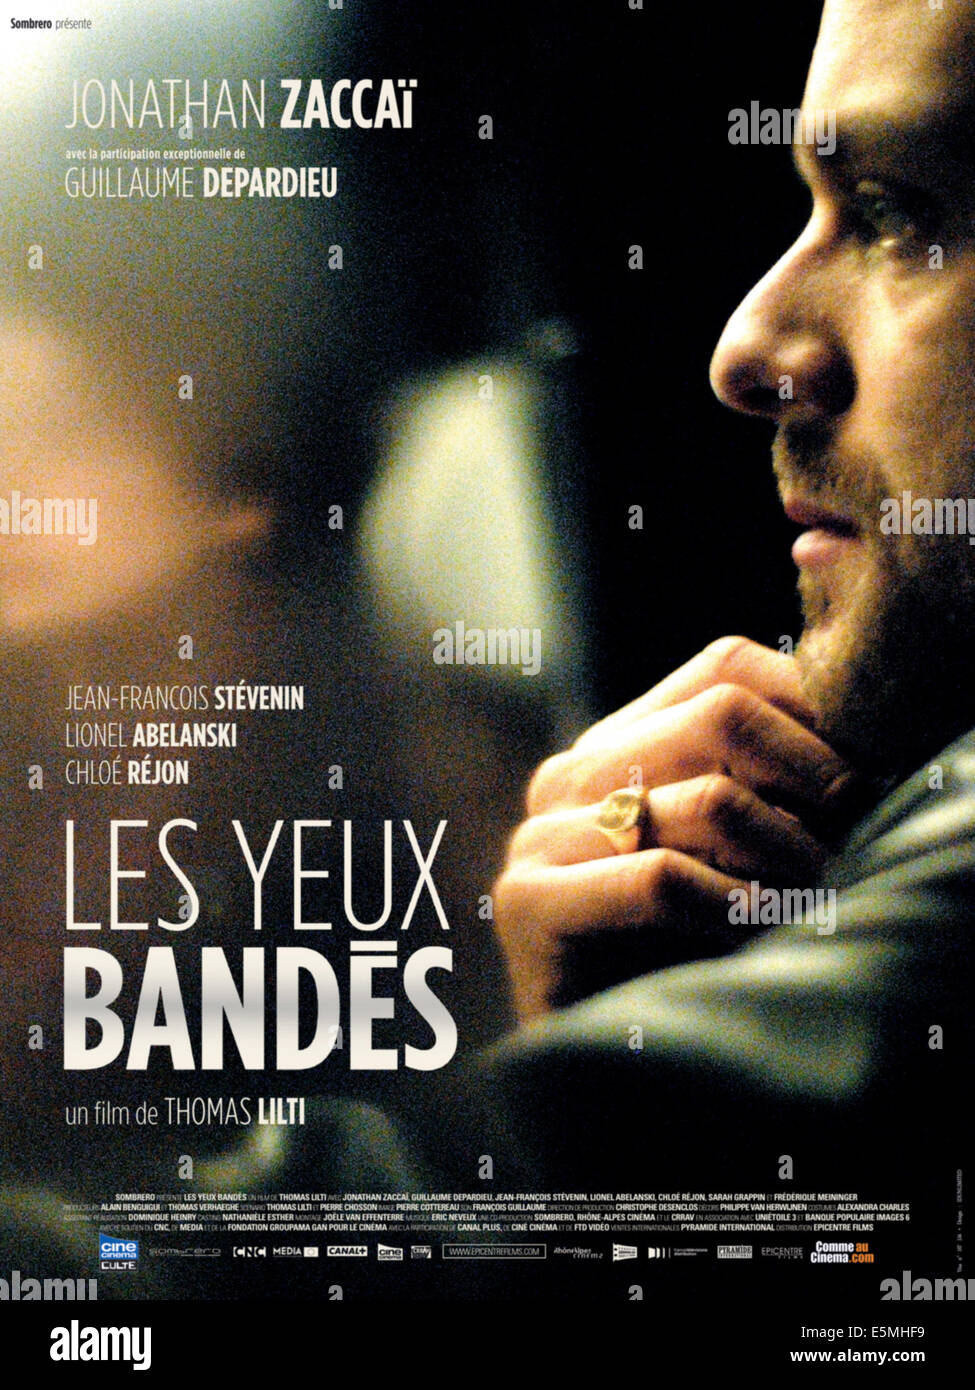 LES YEUX BANDES, poster francese arte, Jonathan Zaccai, 2008. ©epicentro film/cortesia Everett Collection Foto Stock